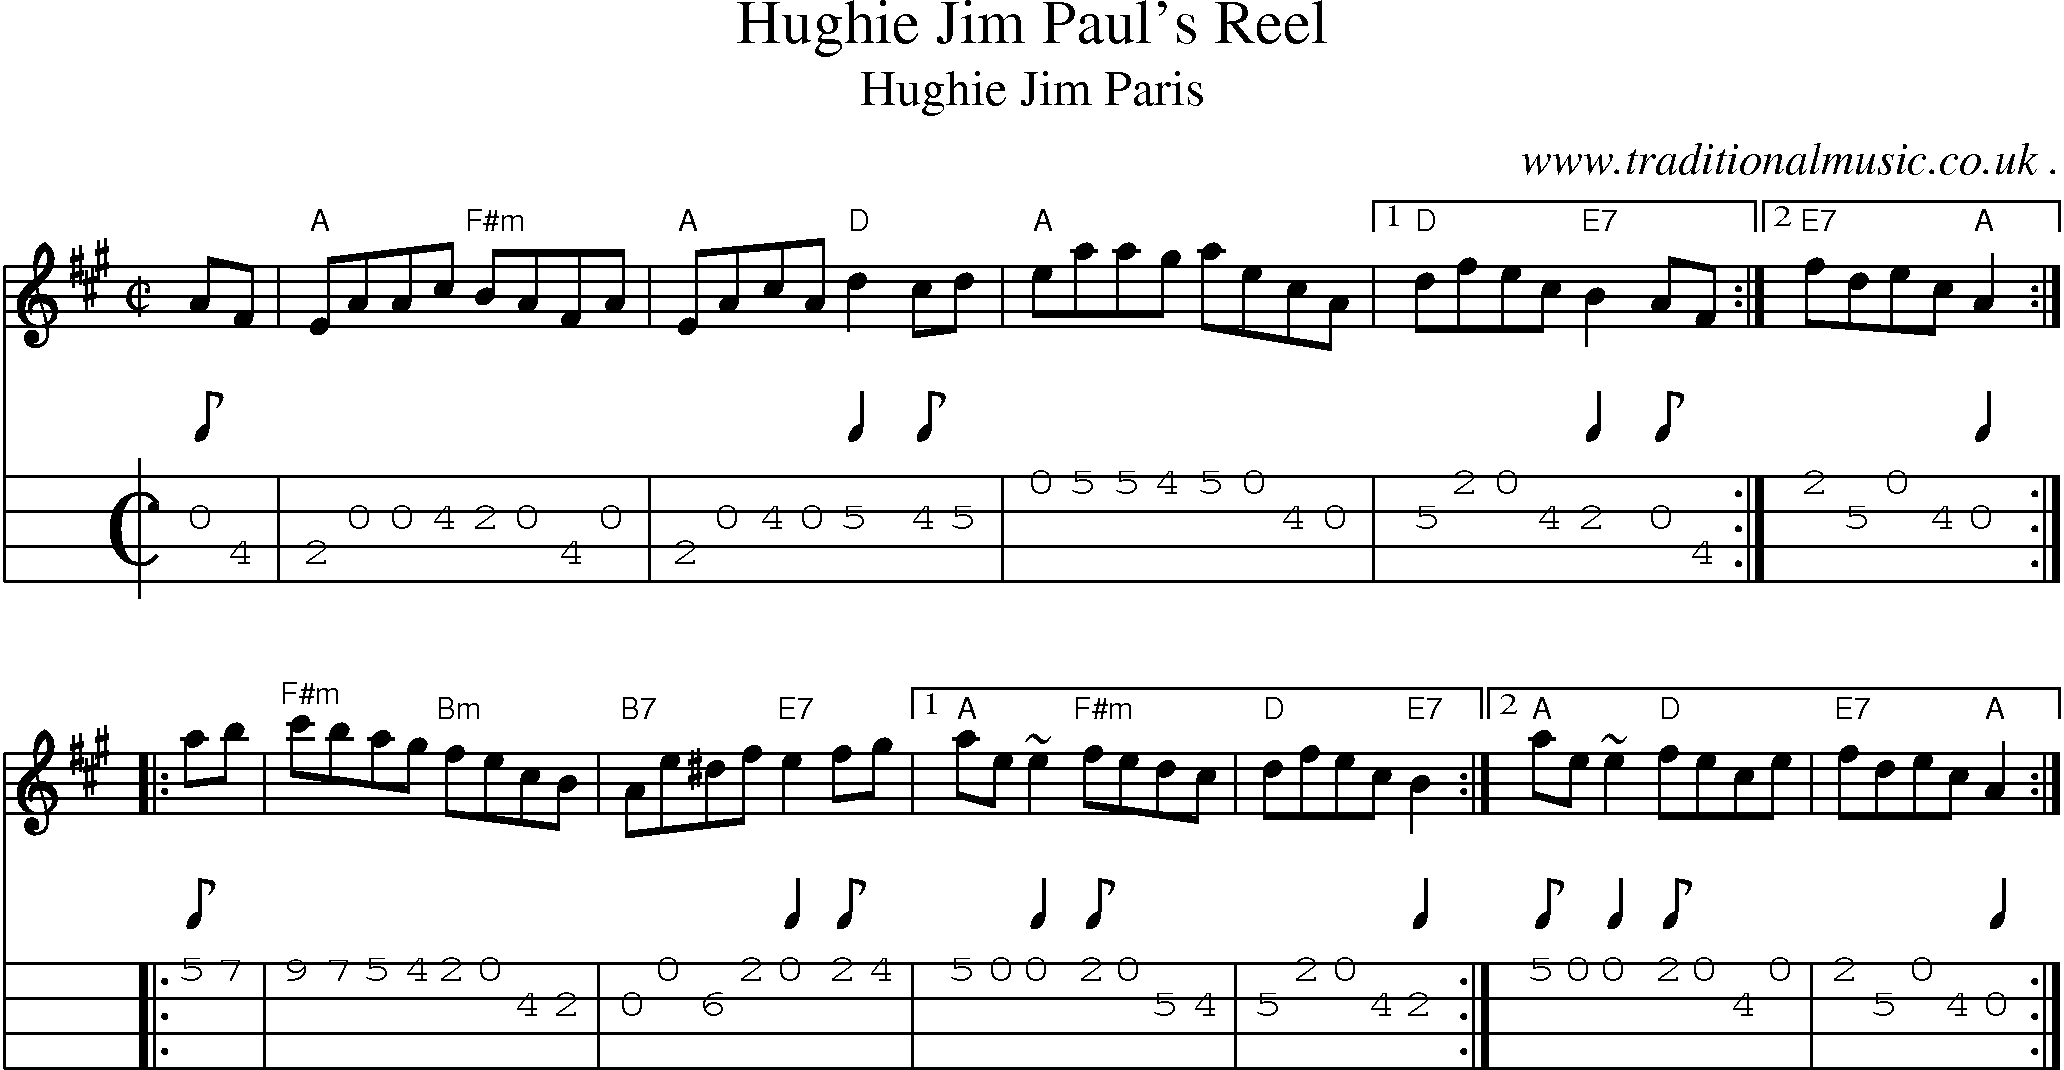 Sheet-music  score, Chords and Mandolin Tabs for Hughie Jim Pauls Reel